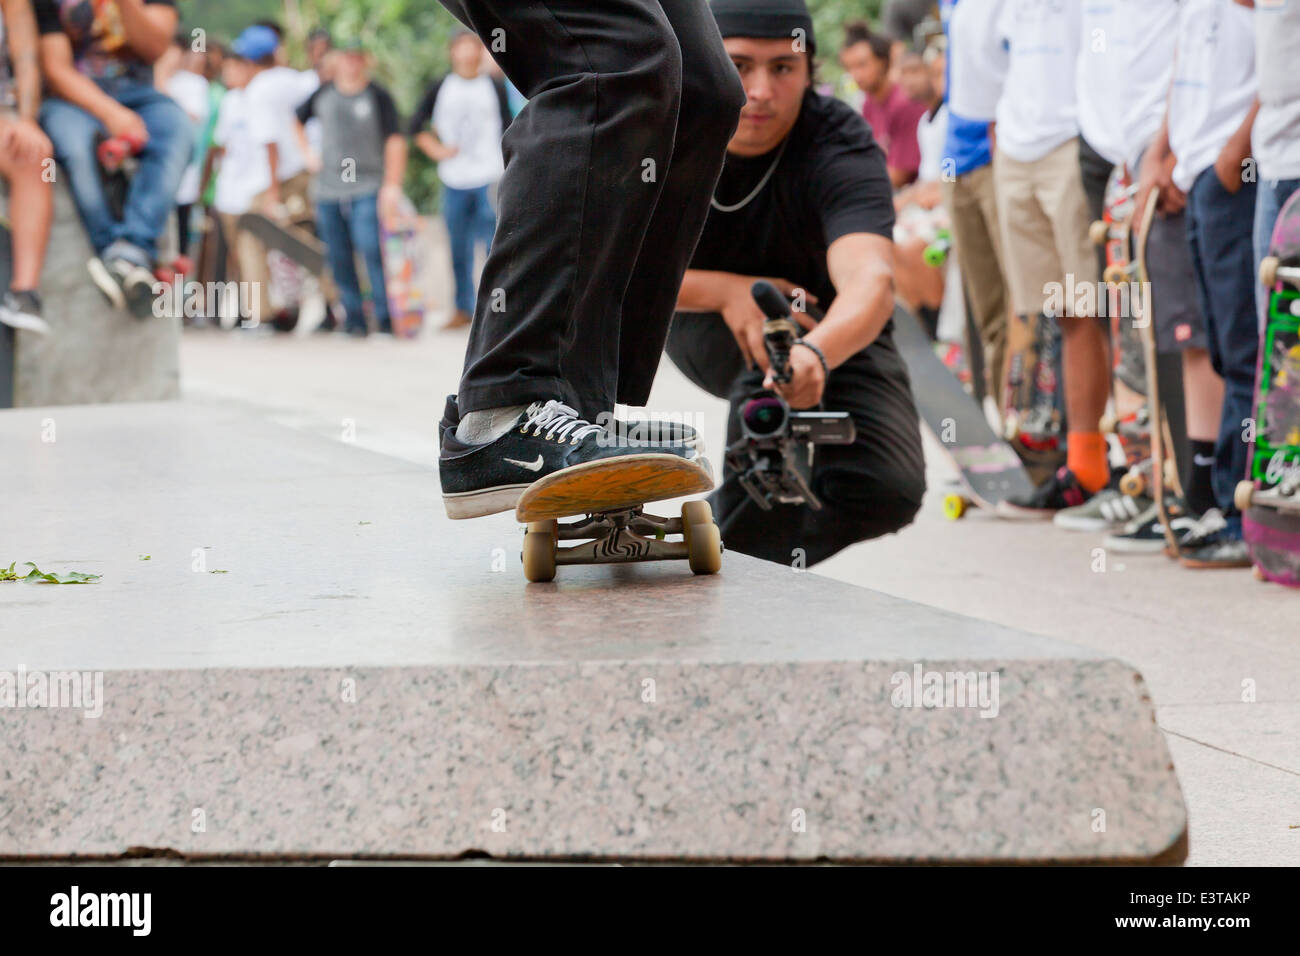 Street skateboarder approaching jump - USA Stock Photo